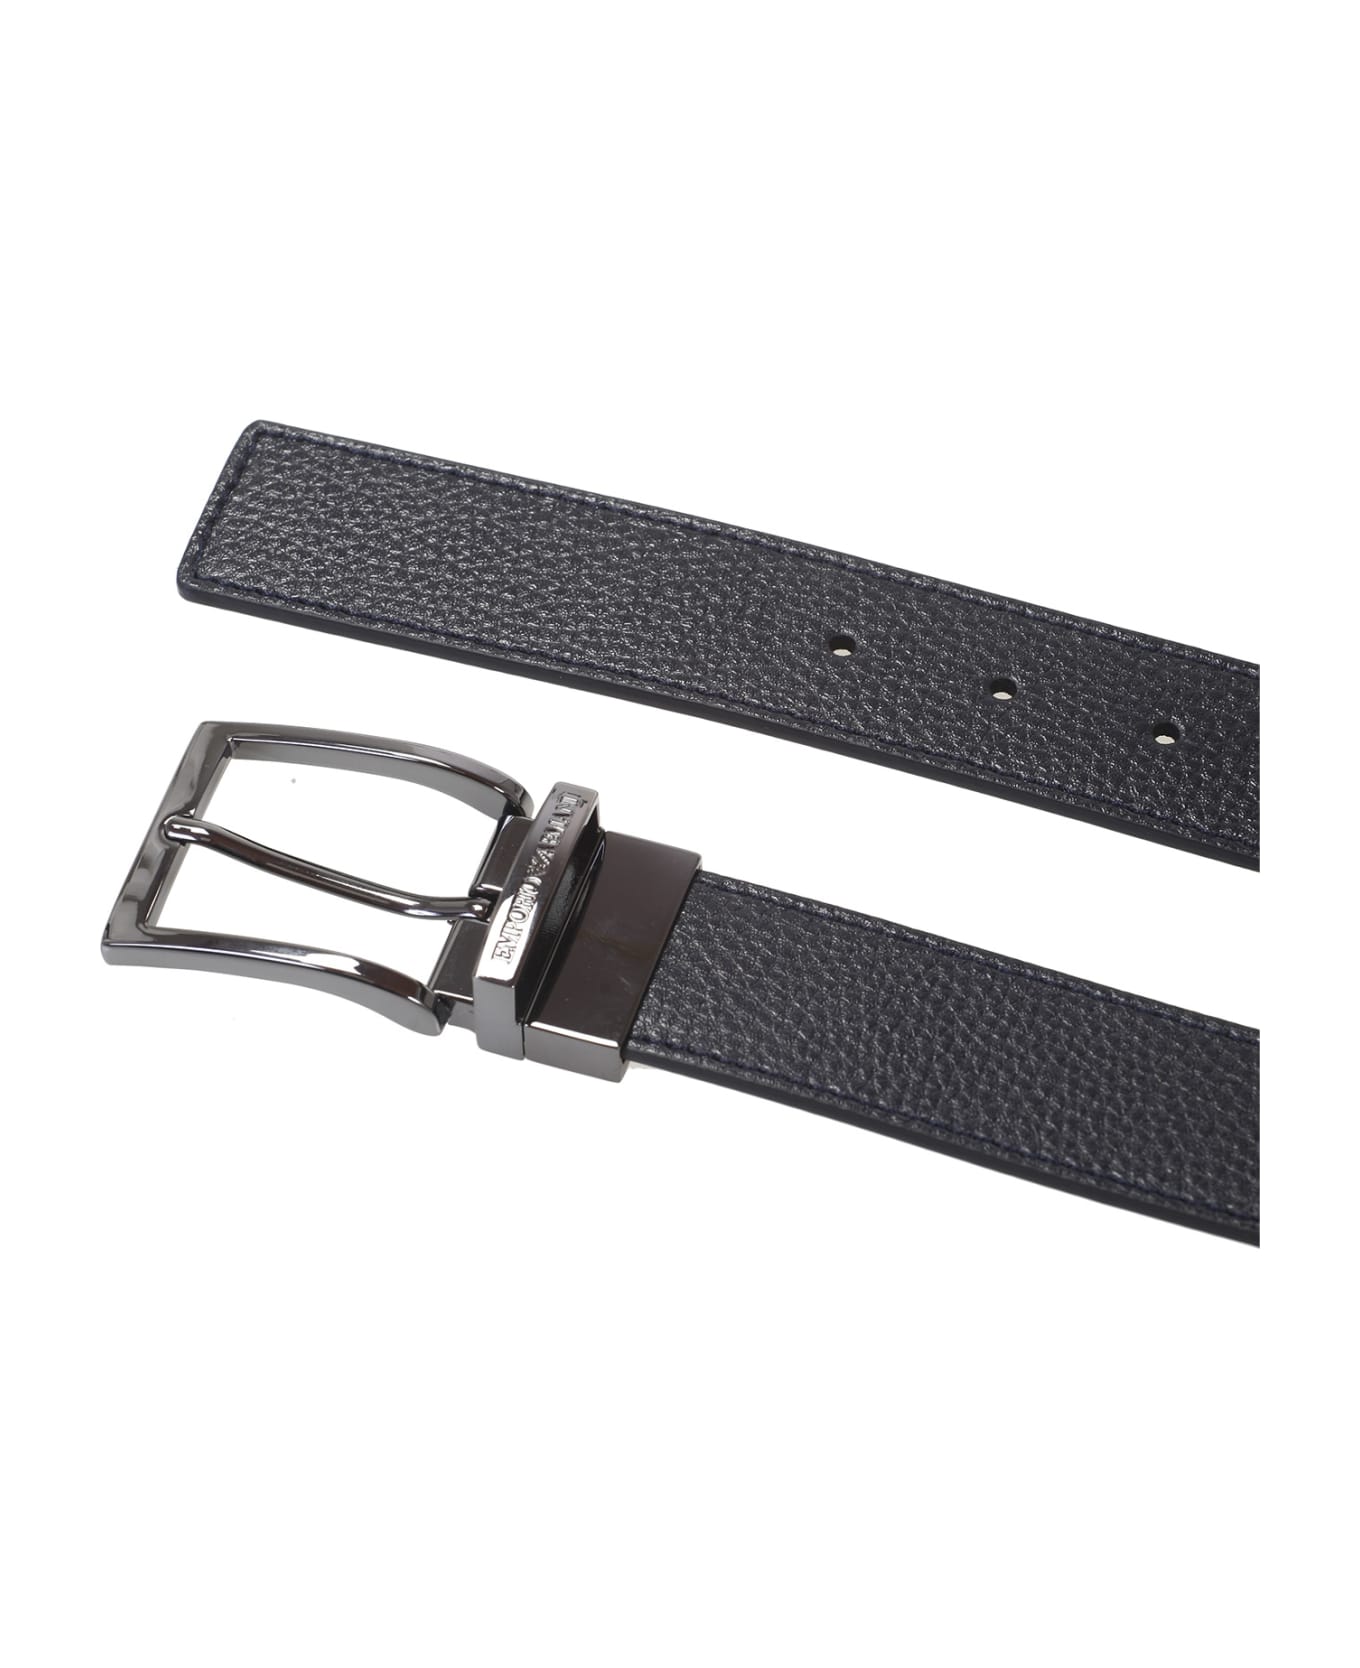 Emporio Armani Leather Belt - Blue ベルト